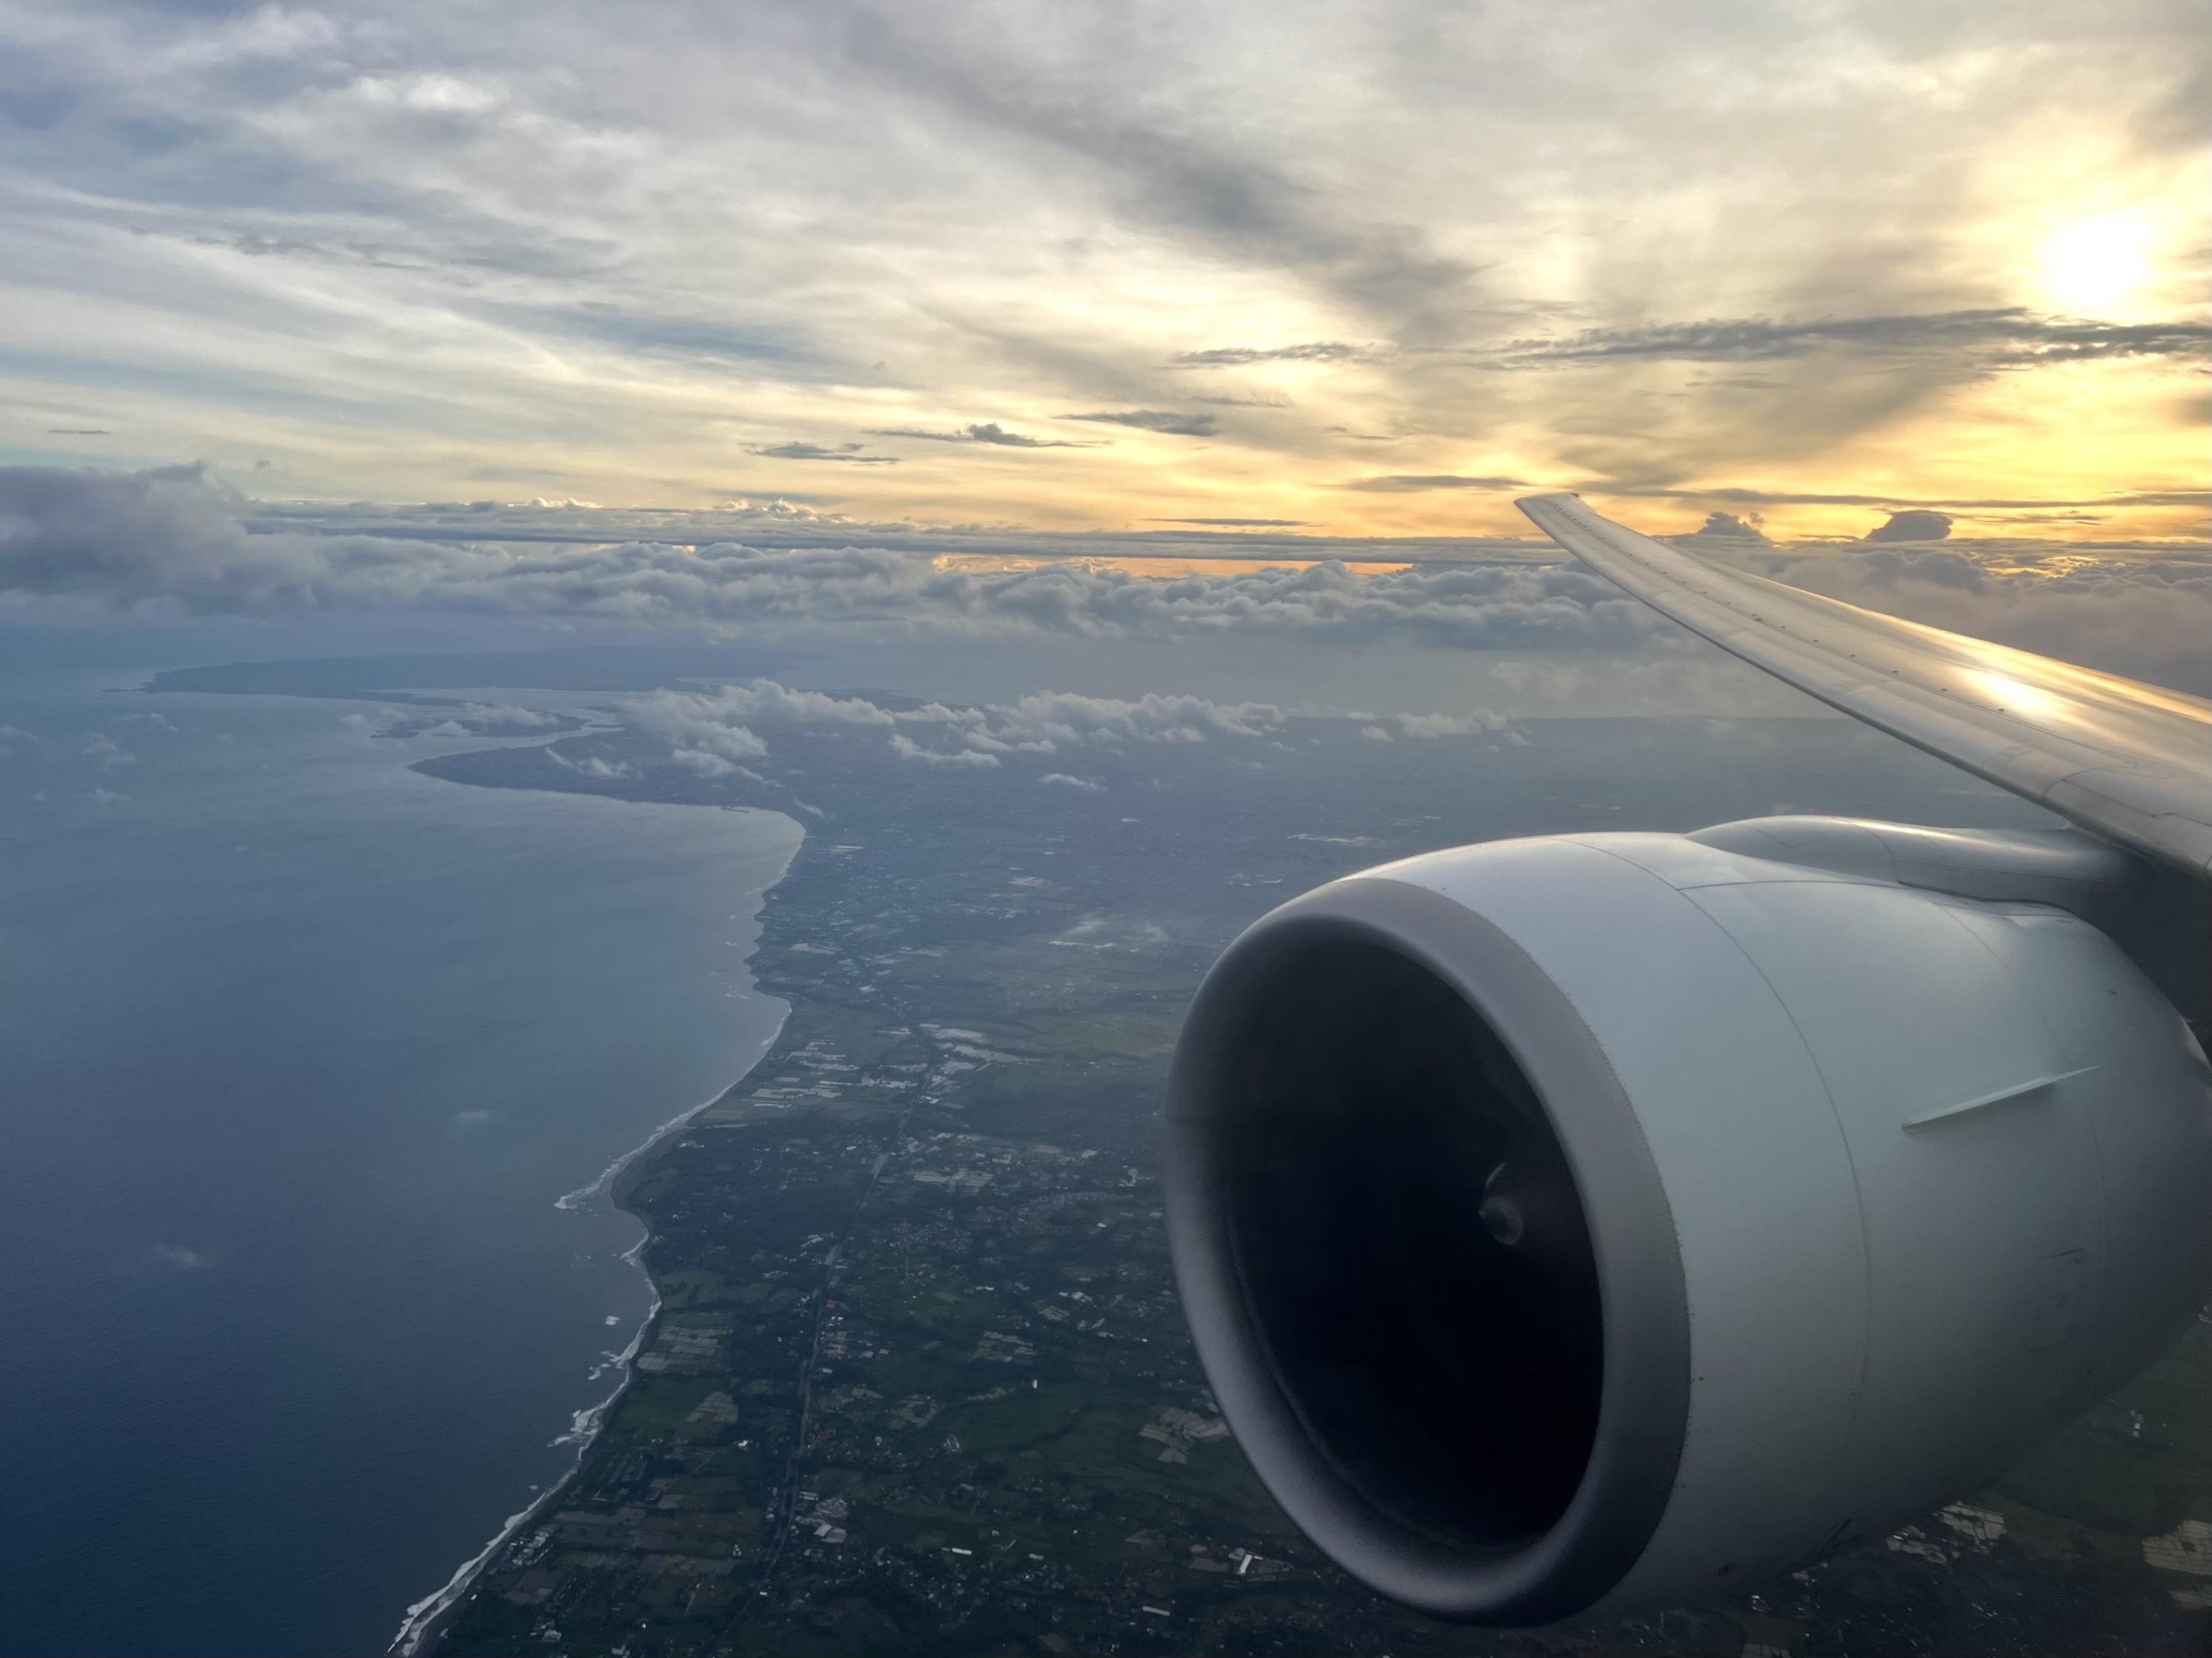 Landing in Bali